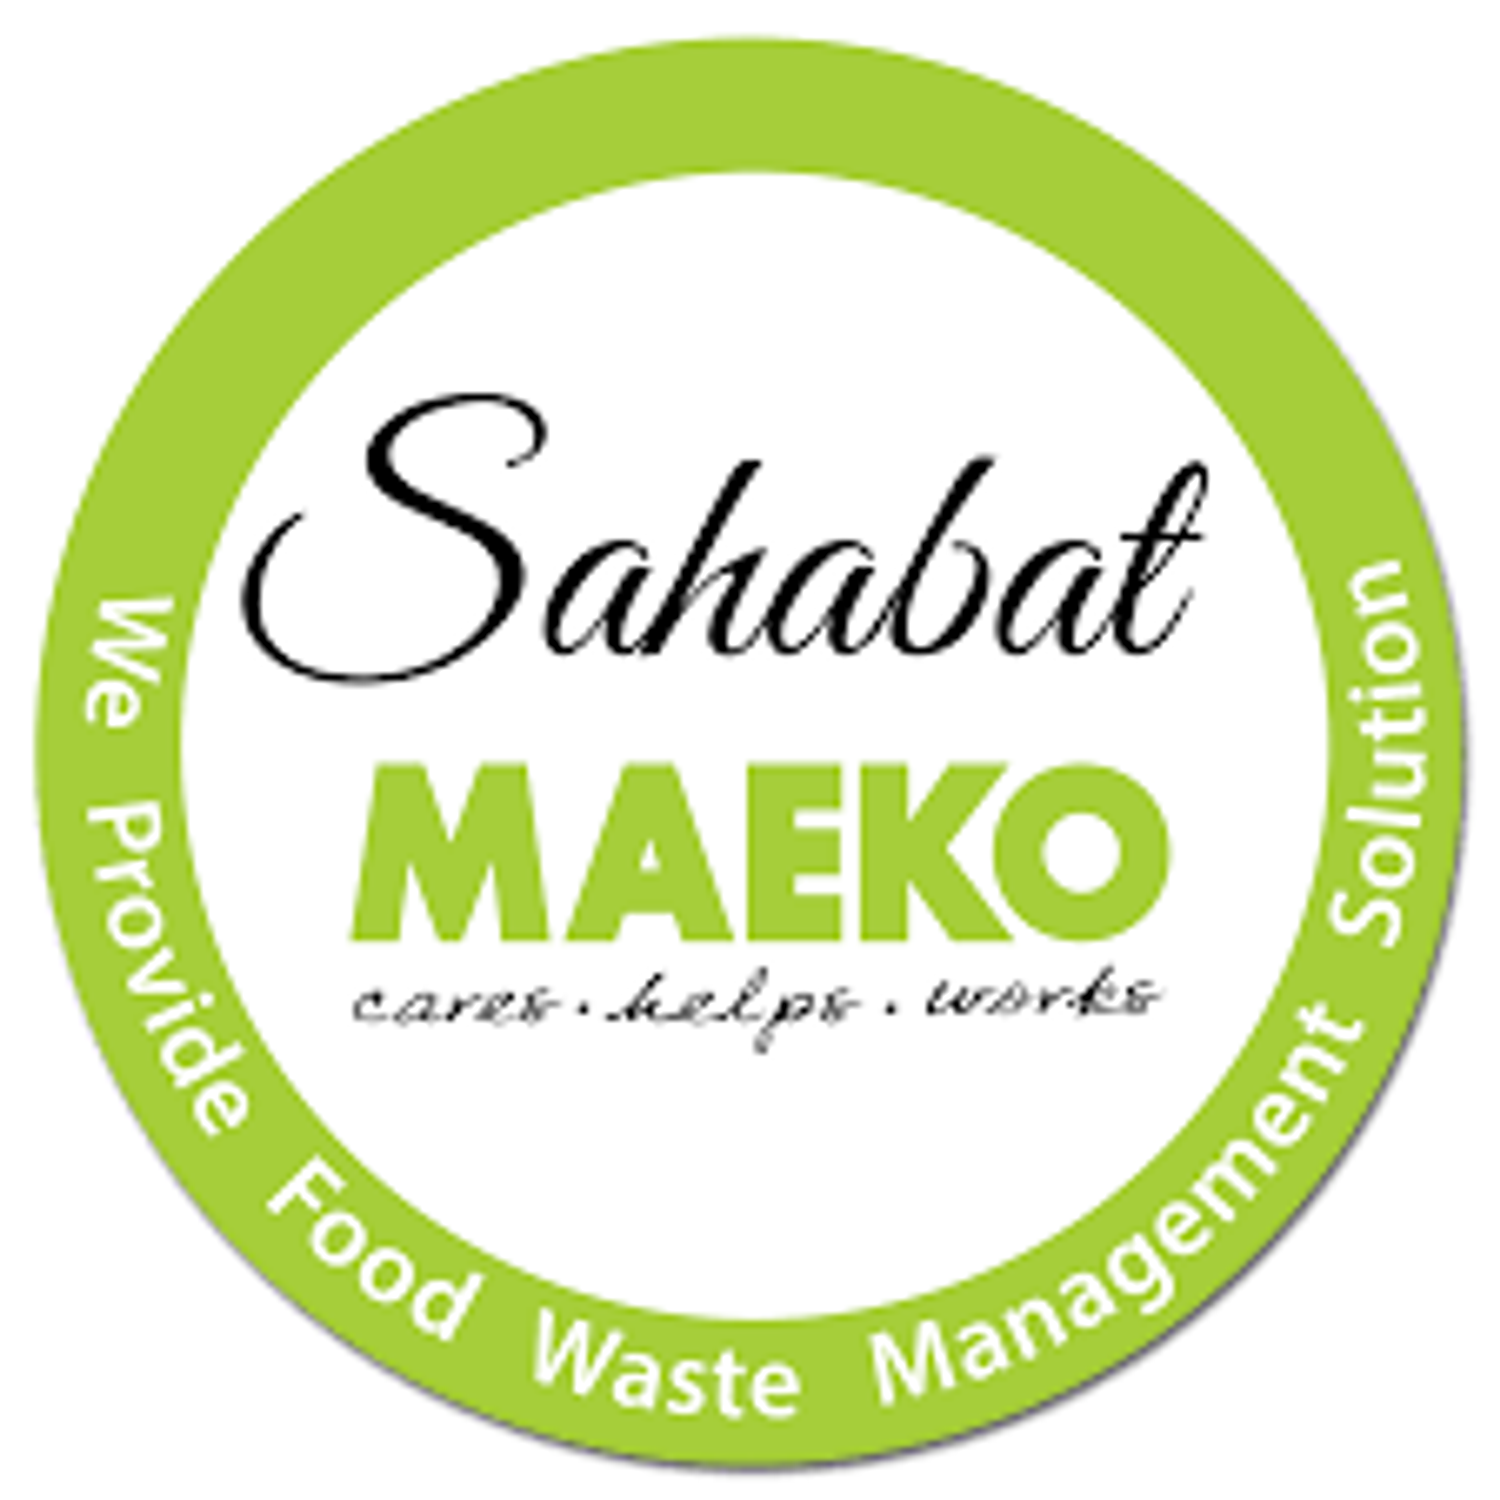 Circlepac Malaysia - Mae Ooi, Sales Director and Co-Founder of MAEKO